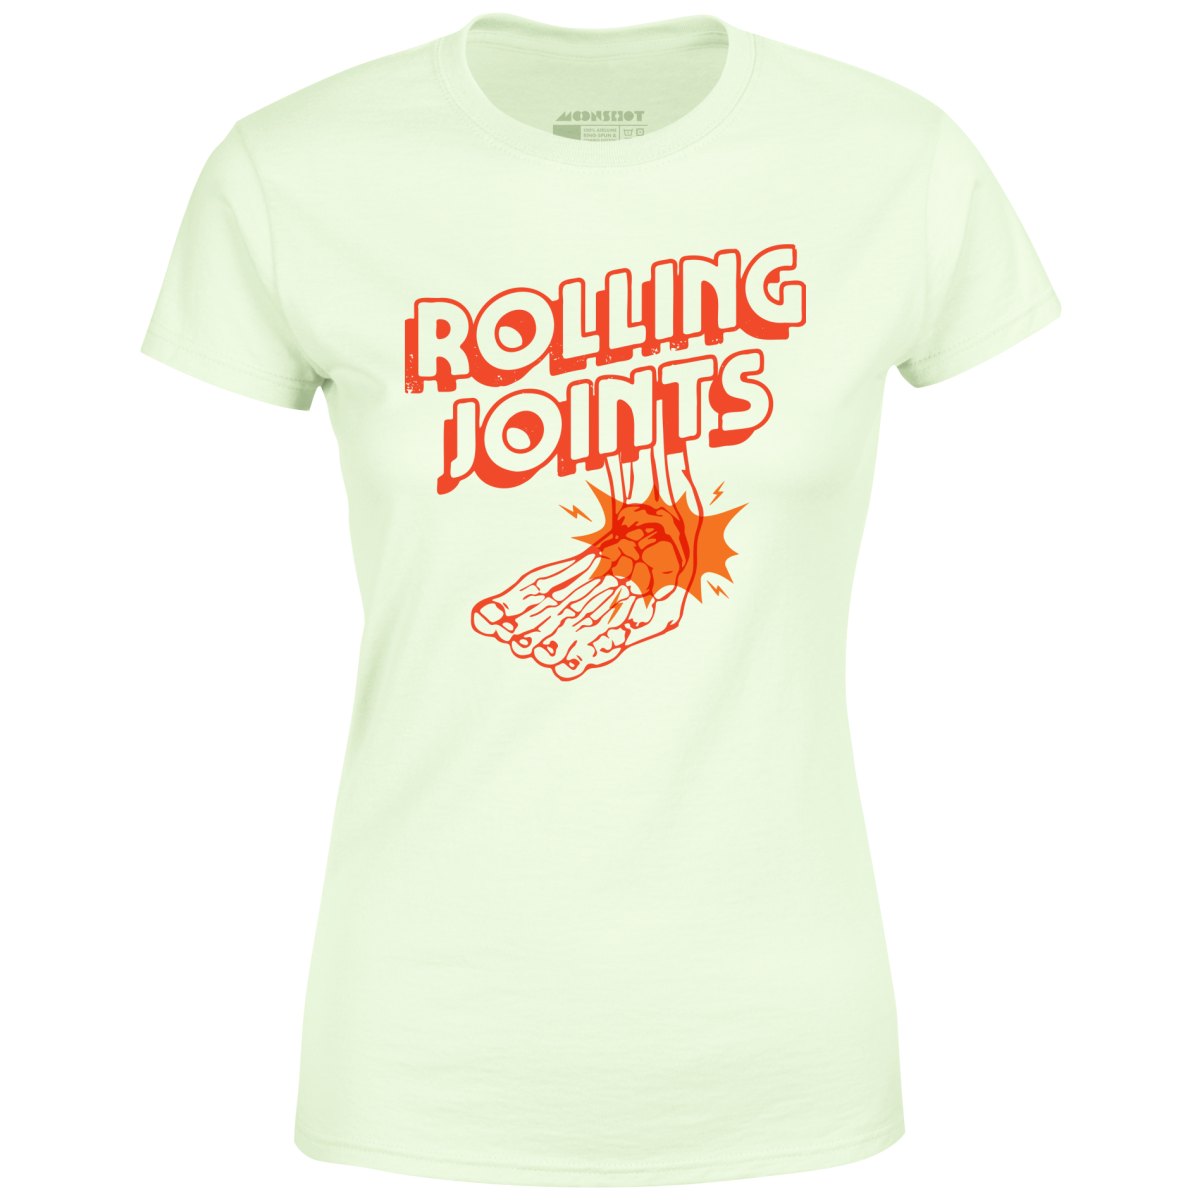 Rolling Joints - Women's T-Shirt